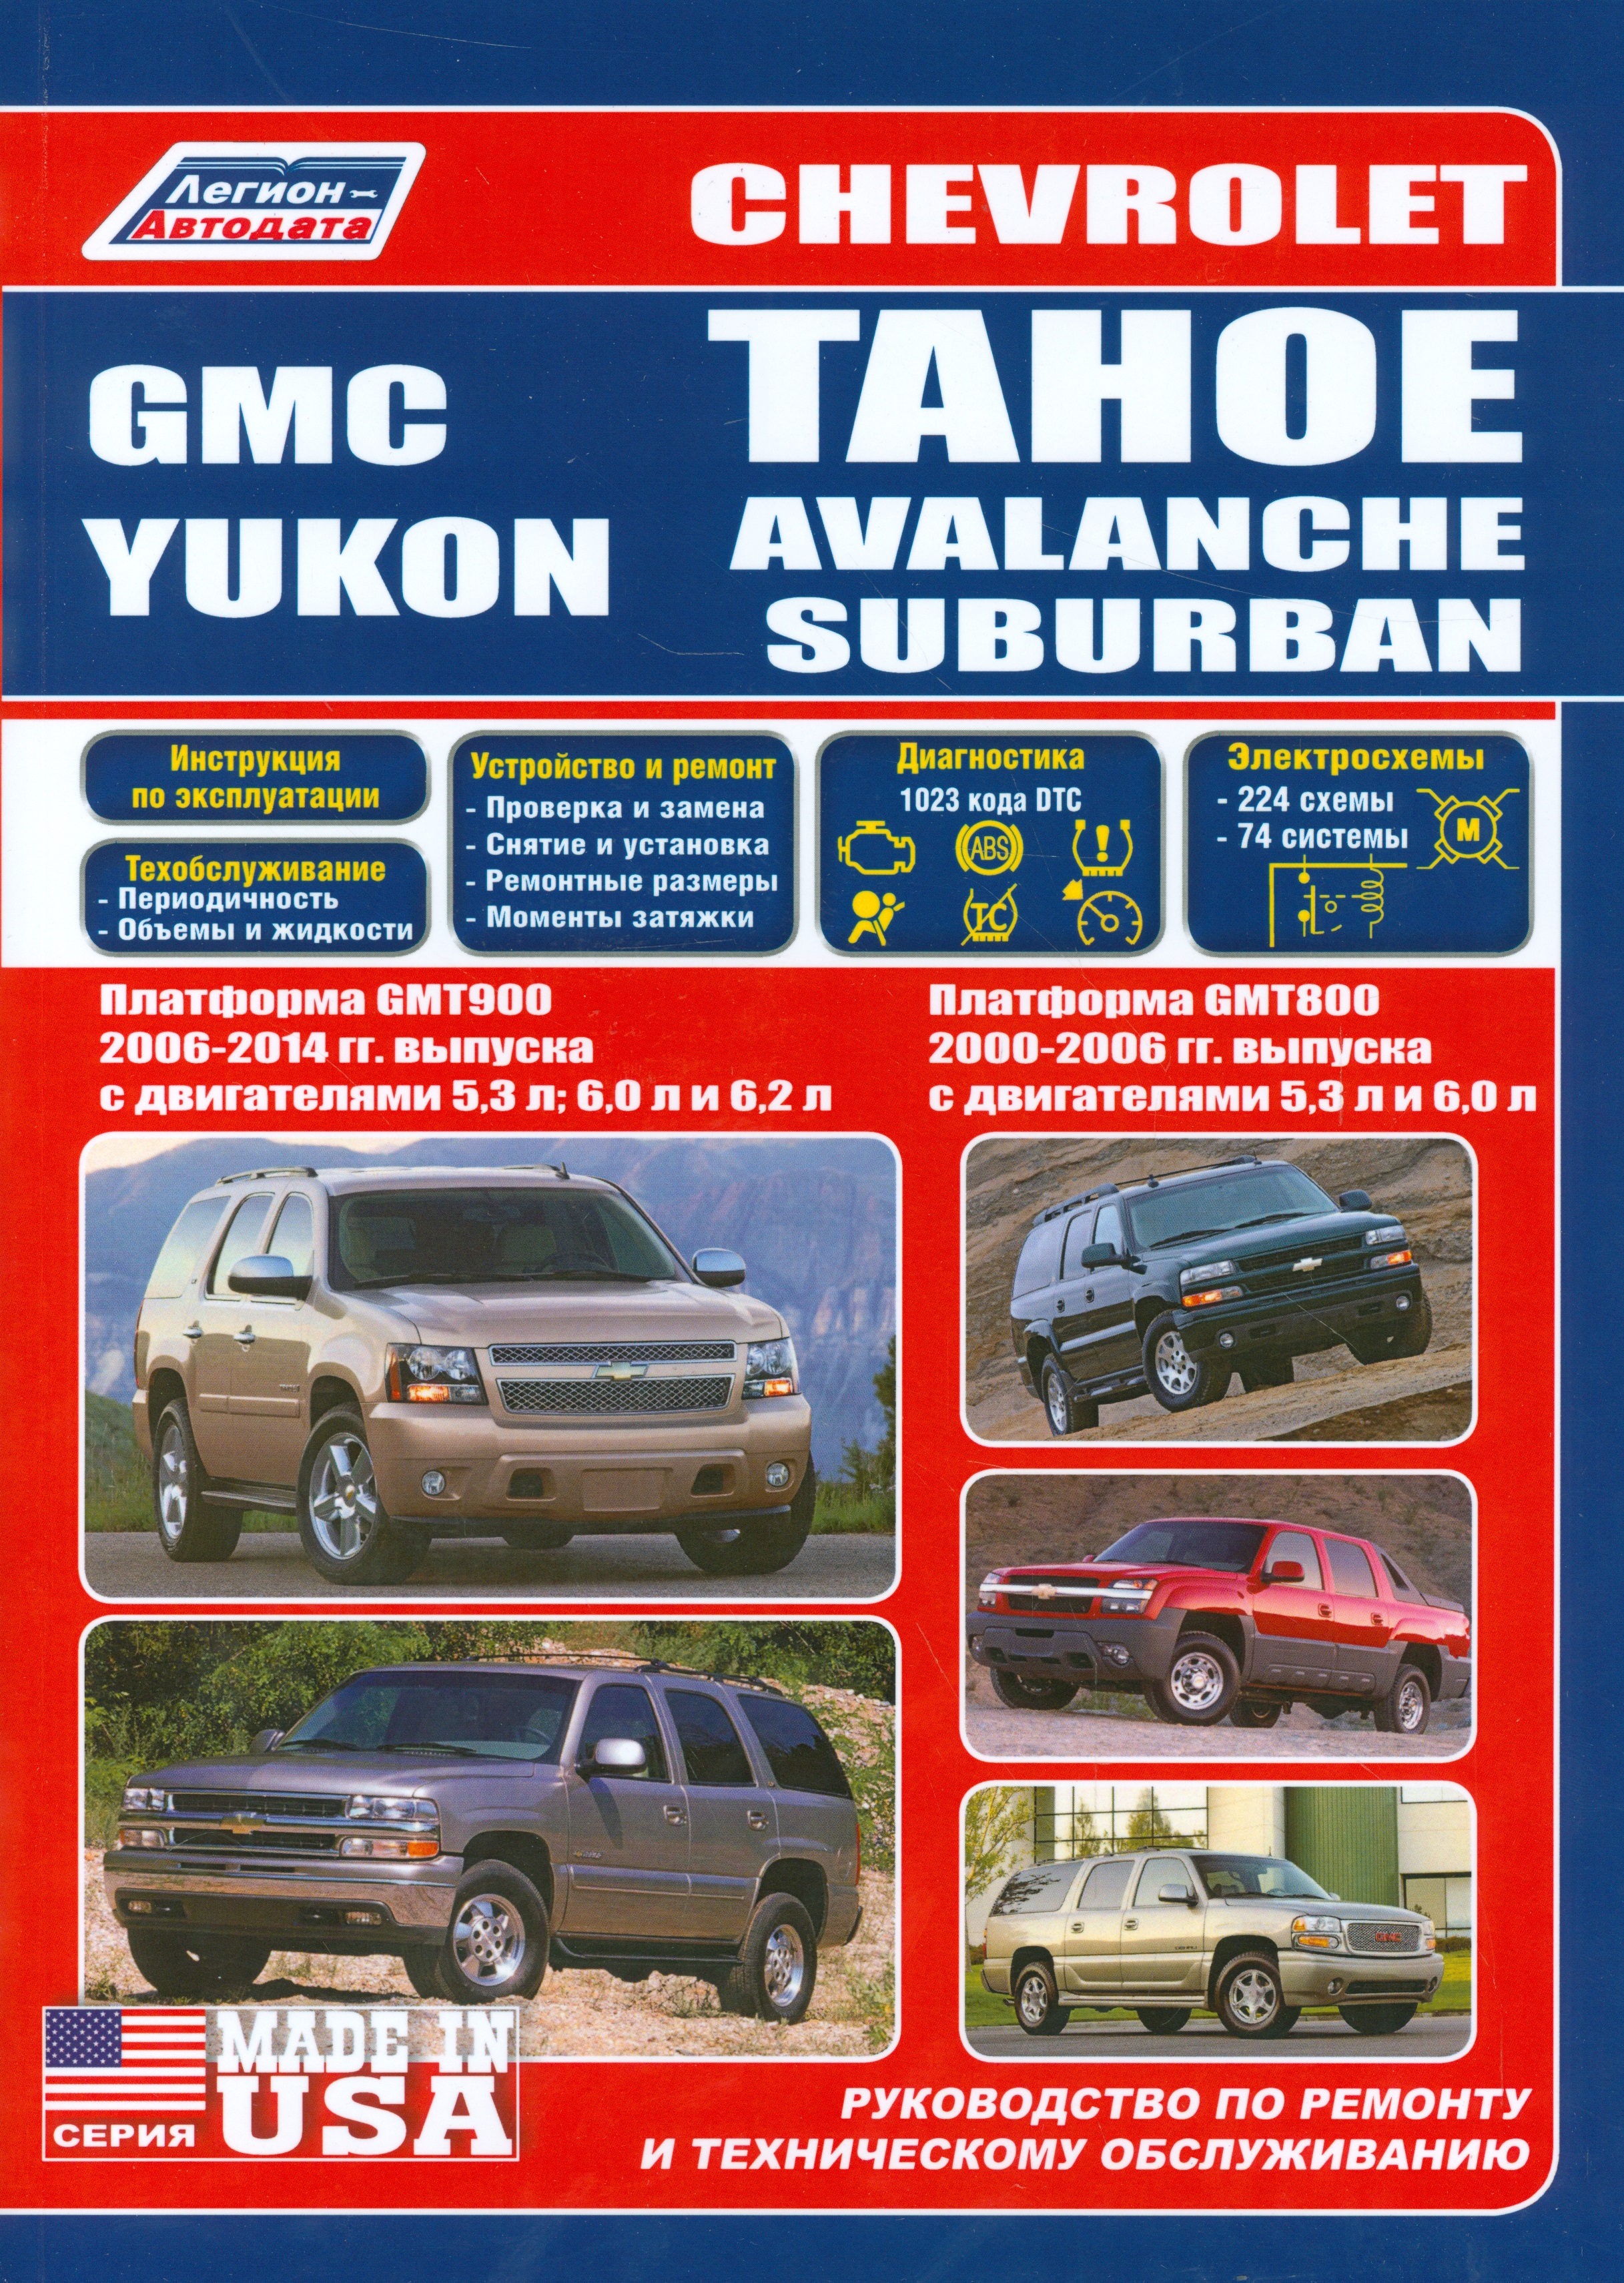 Chevrolet Tahoe. Avalanche, Suburban GMC Yukon. Платформа GMT800 2000-2006 гг. выпуска с двигателями 5,3 л. И 6,0 л. Платформа GMT900 2006-2014 гг. выпуска с двигателями 5,3 л., 6,0 л., 6,2 л. Руководство по ремонту и техническому обслуживанию new flex fuel composition sensor 10371025 12570260 suit for chevrolet tahoe cadillac escalade gmc yukon su7804